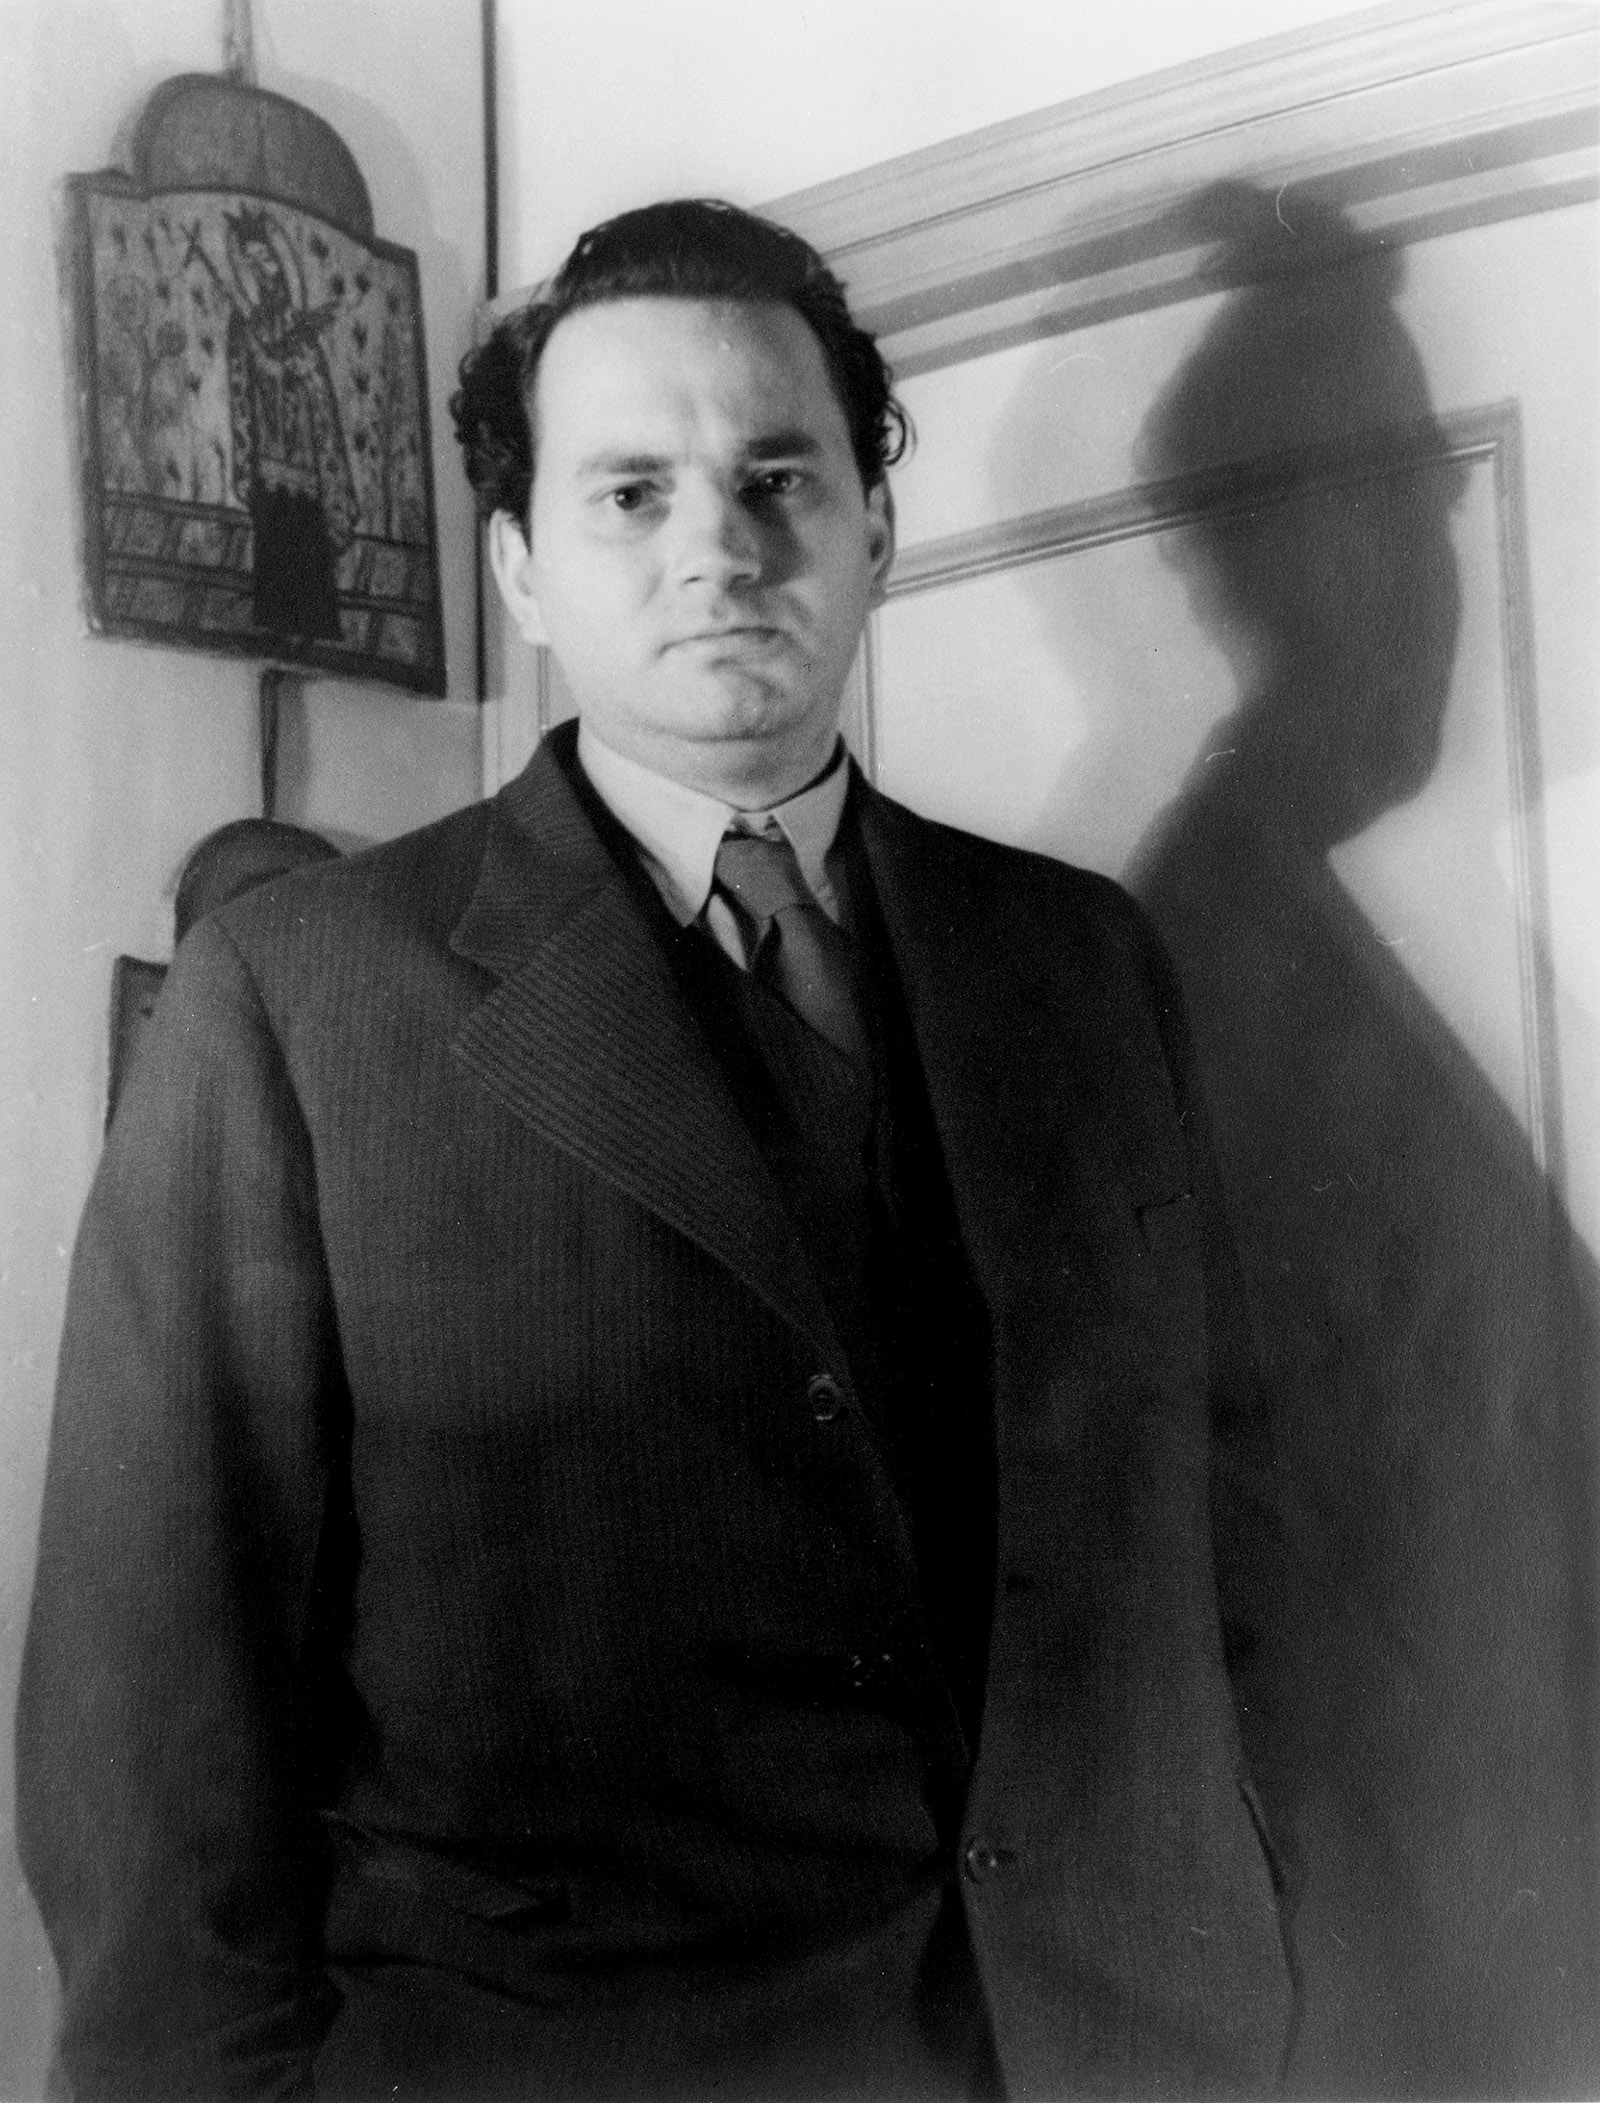 Thomas Wolfe, April 1937; photograph by Carl Van Vechten